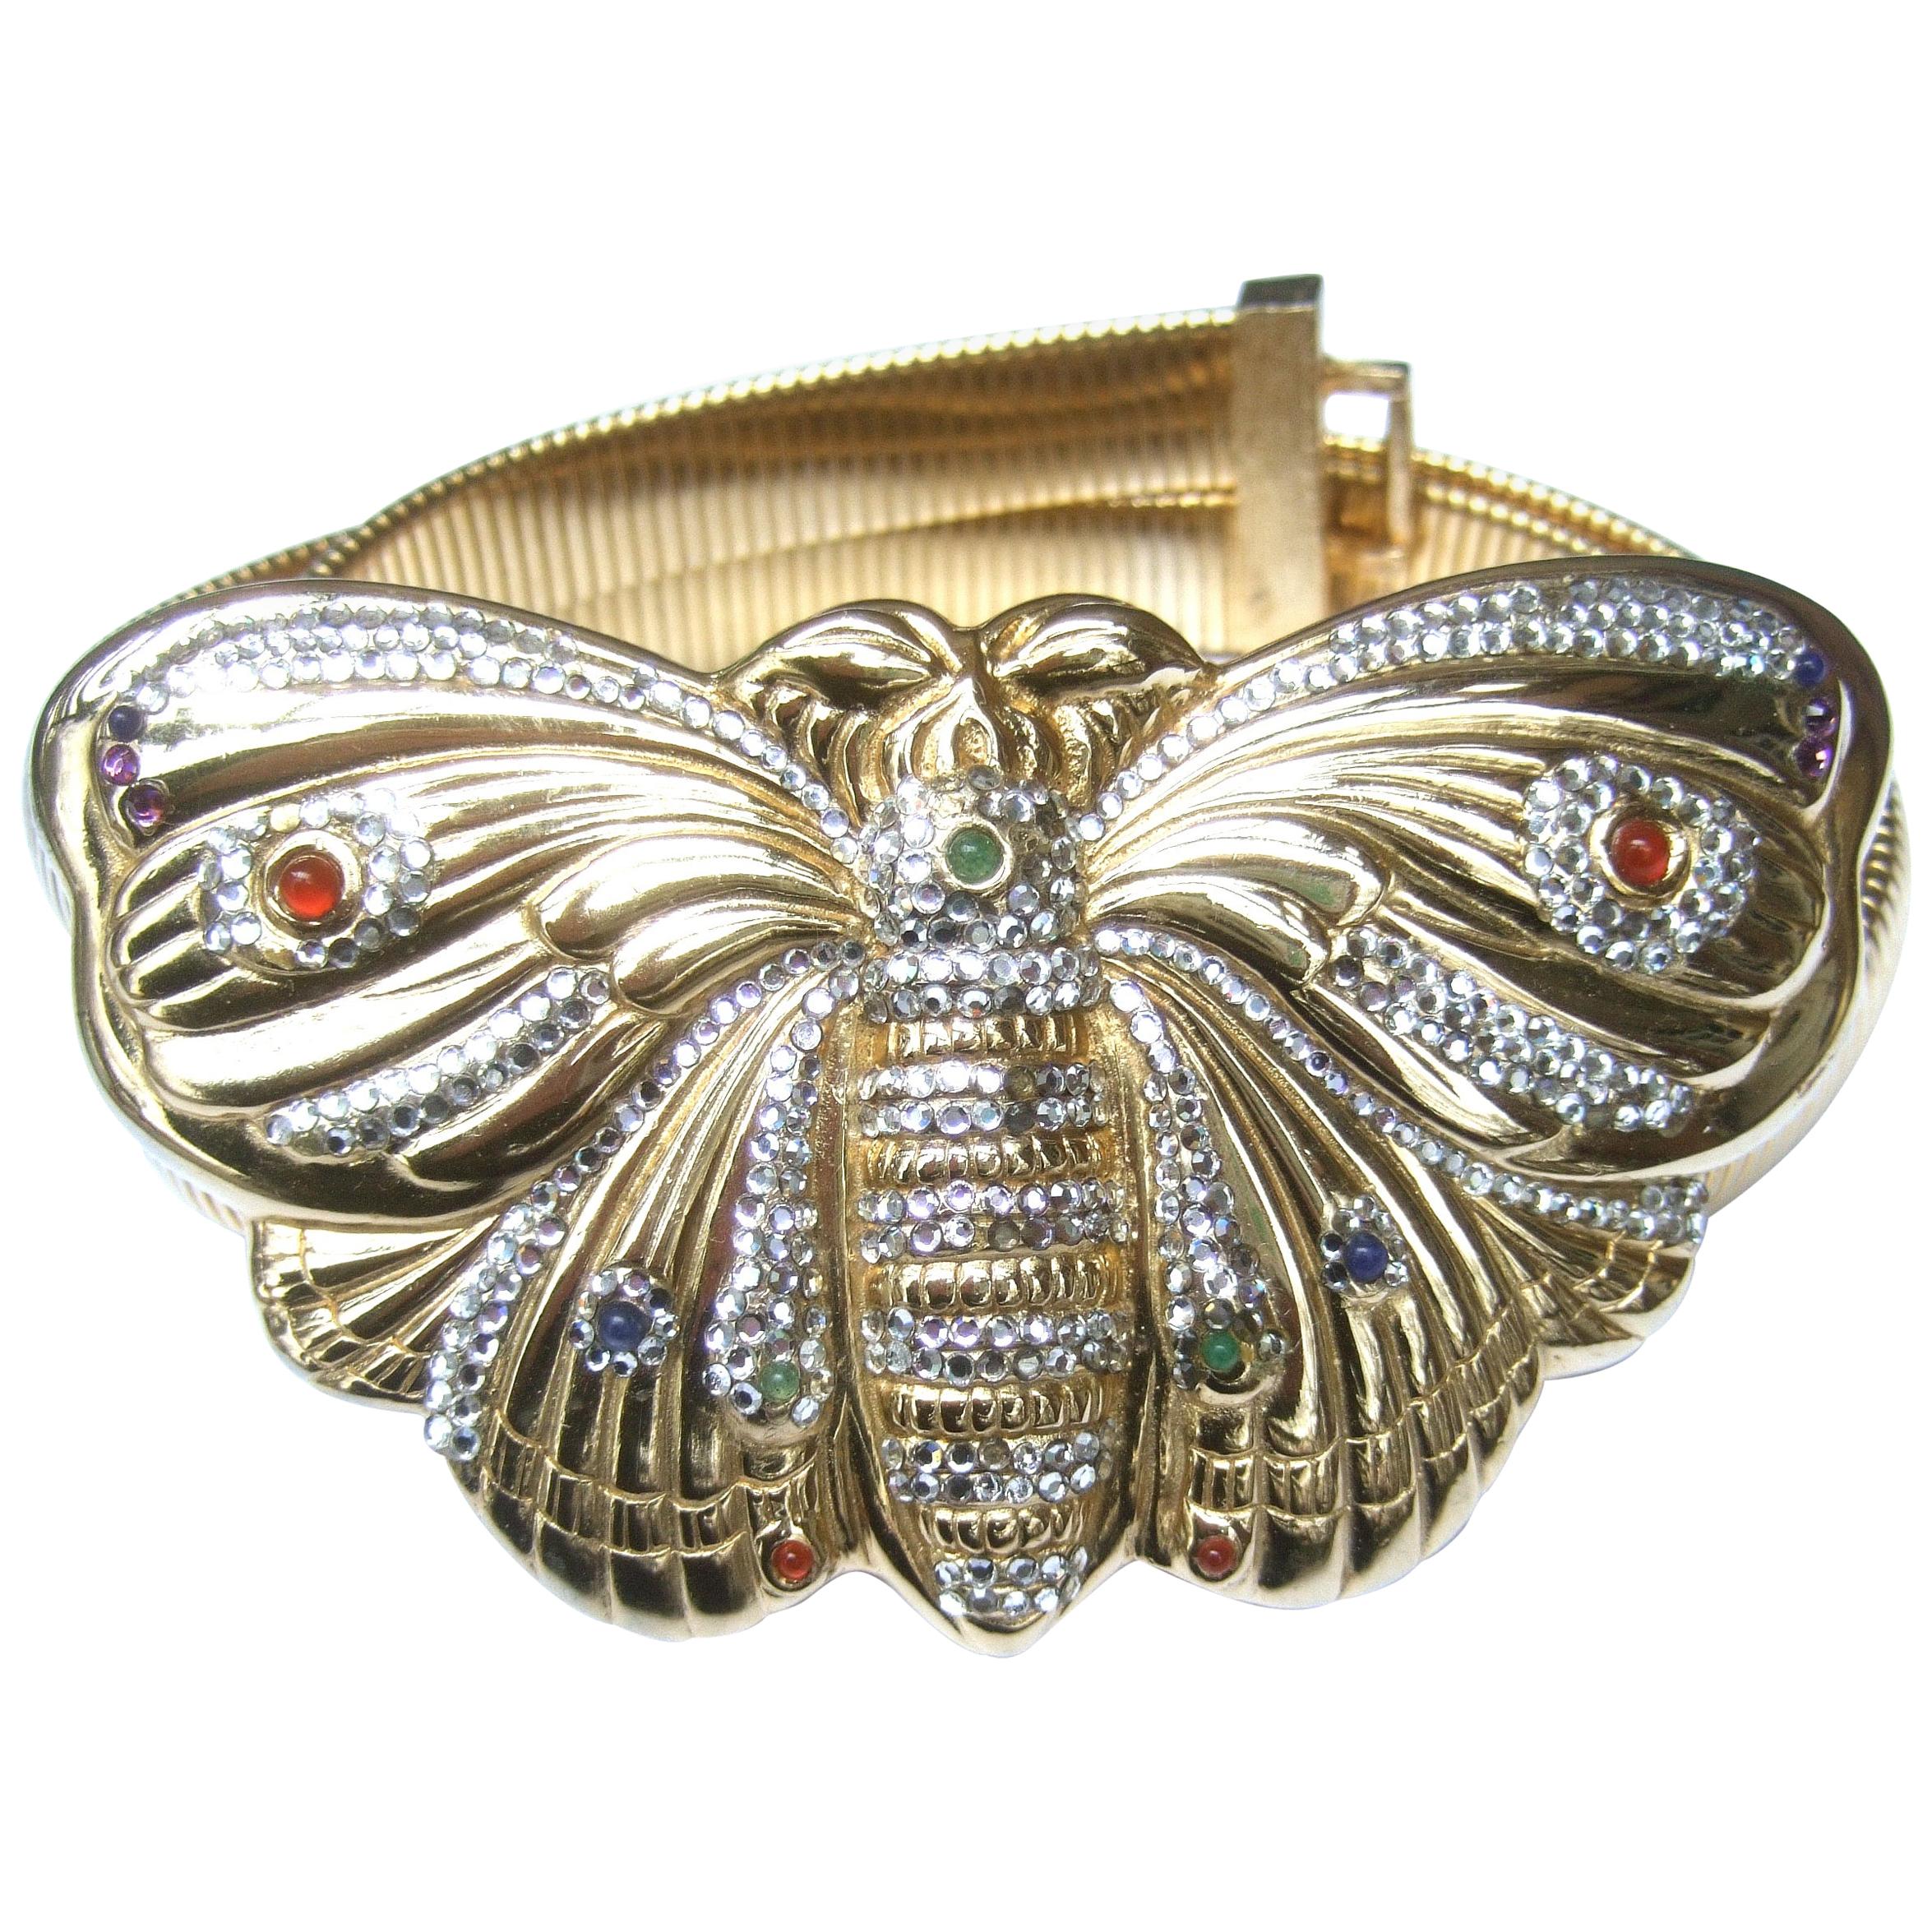 Judith Leiber Opulent juwelenbesetzter, großformatiger, vergoldeter Schmetterlingsgürtel aus Metall, um 1980